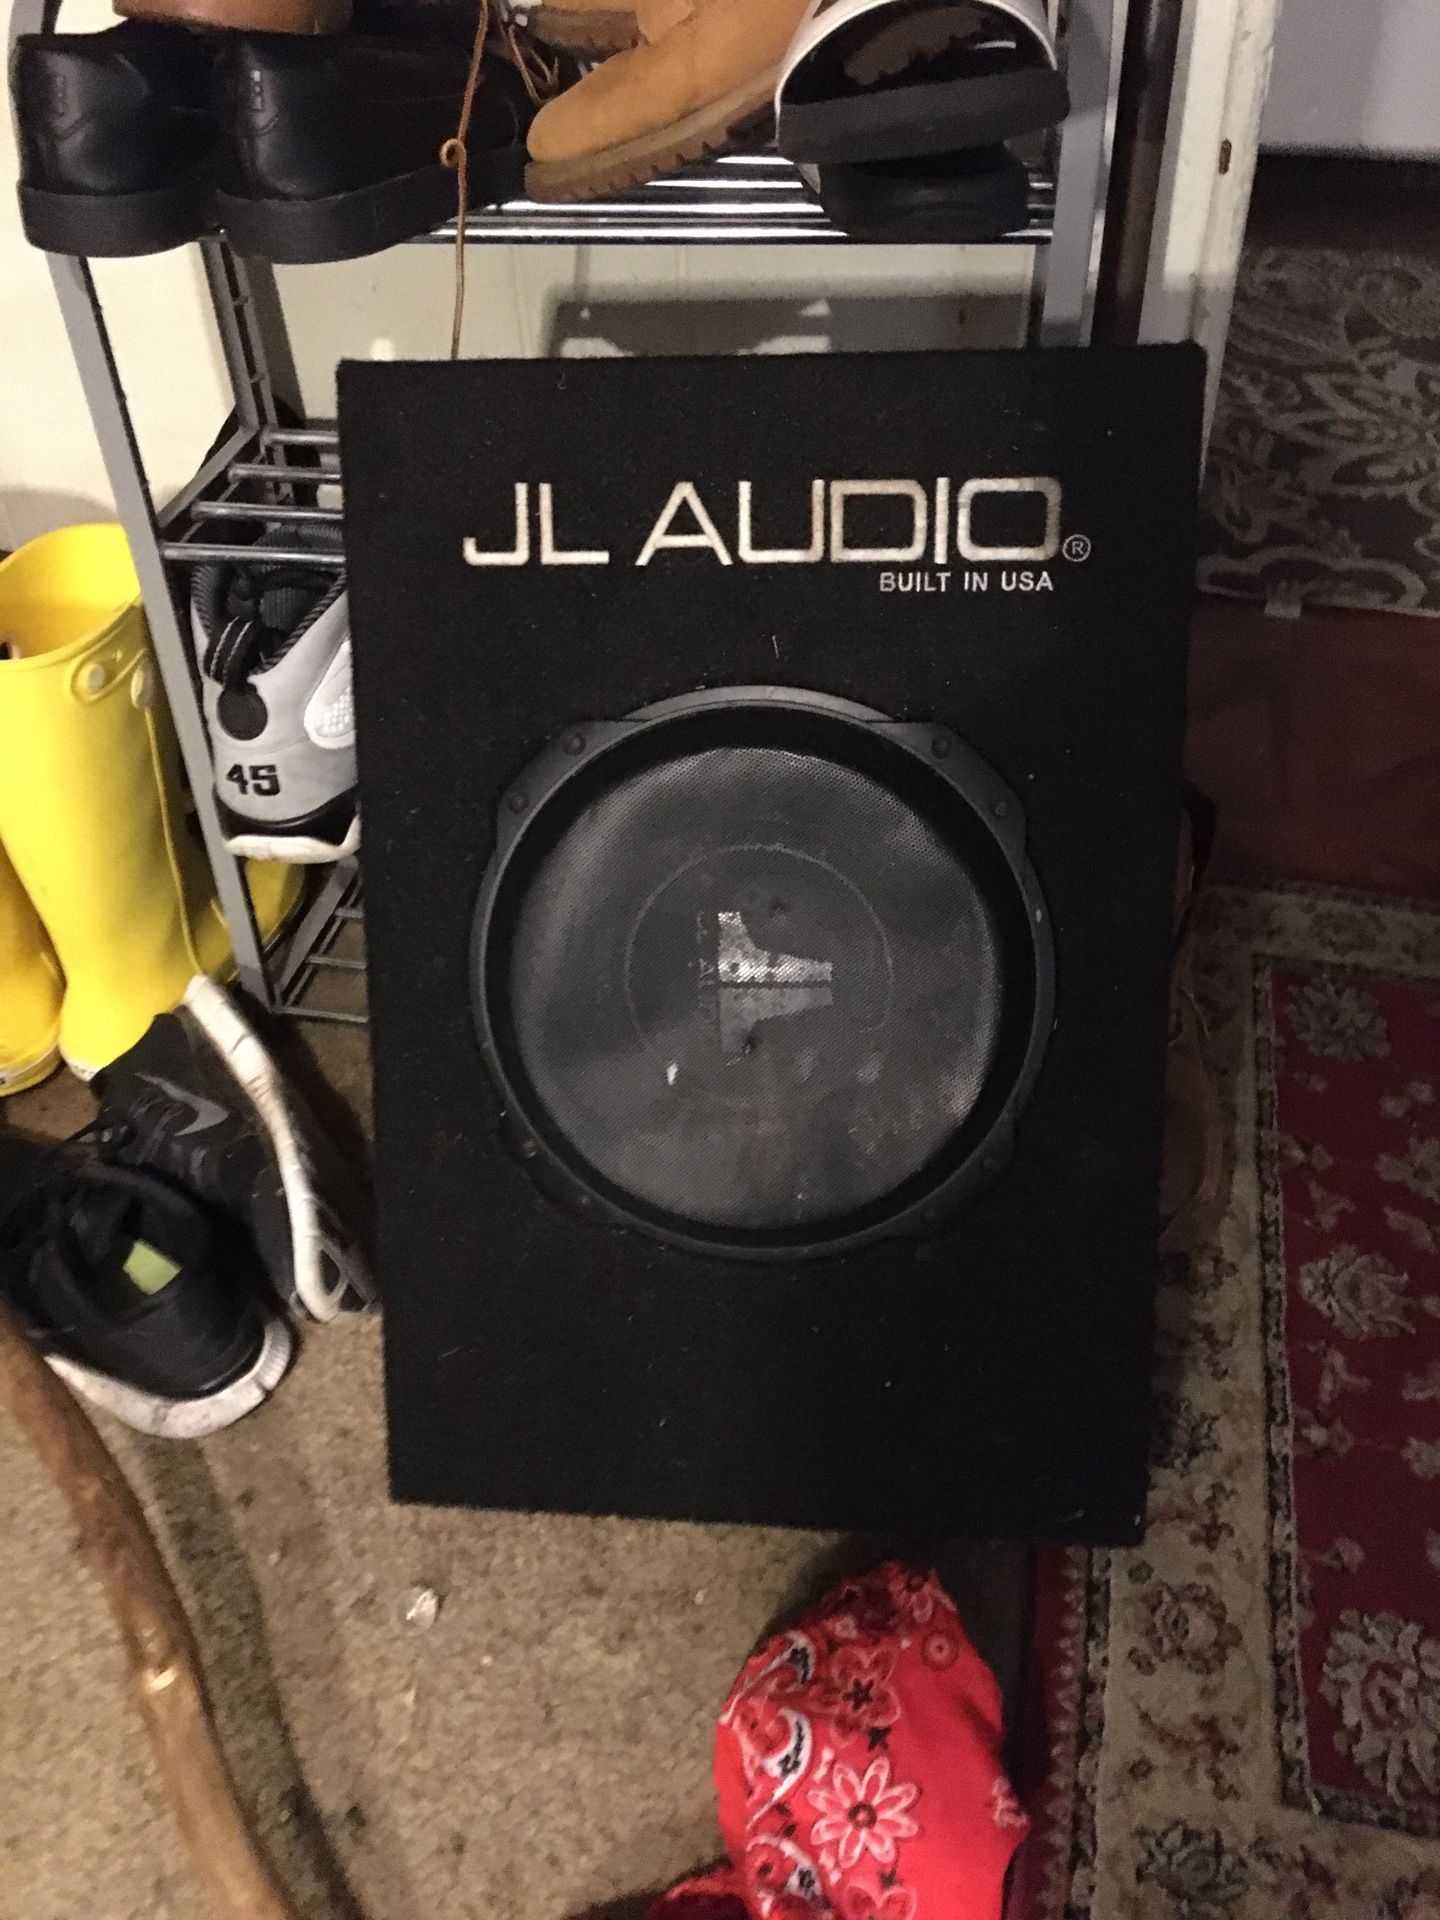 JL Audio 10 inch subwoofer in box